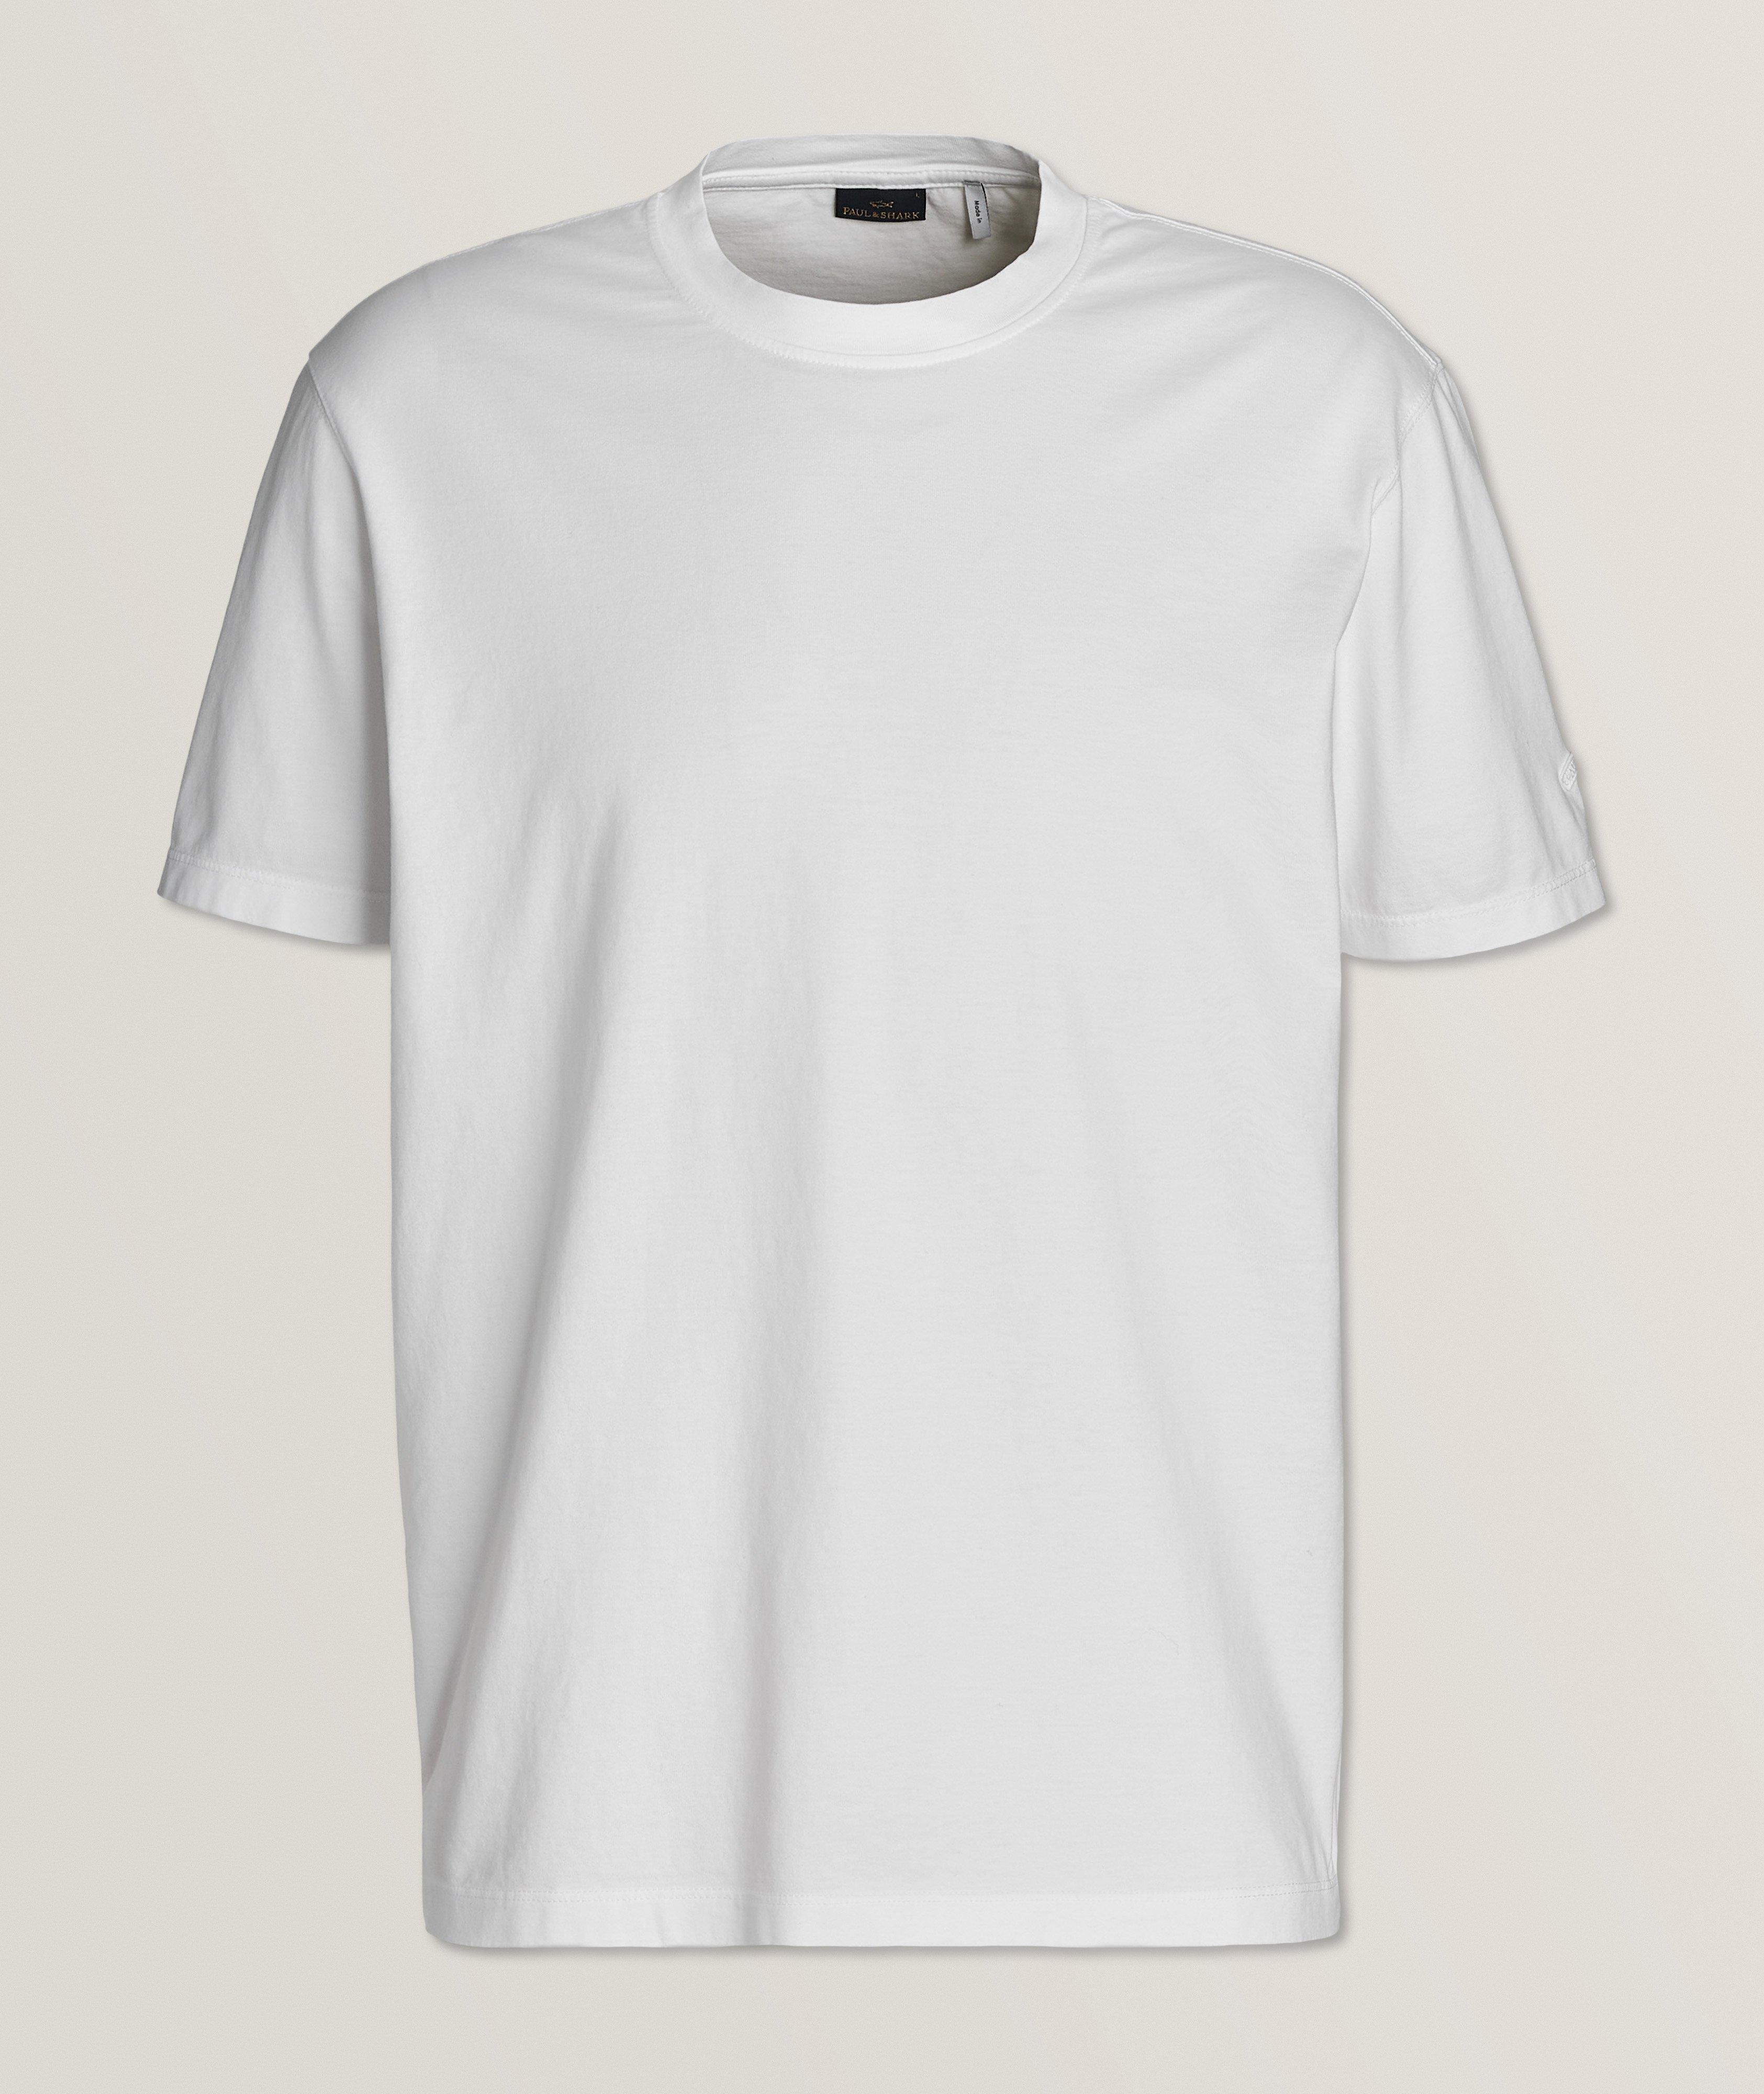 Garment Dyed Cotton T-Shirt image 0